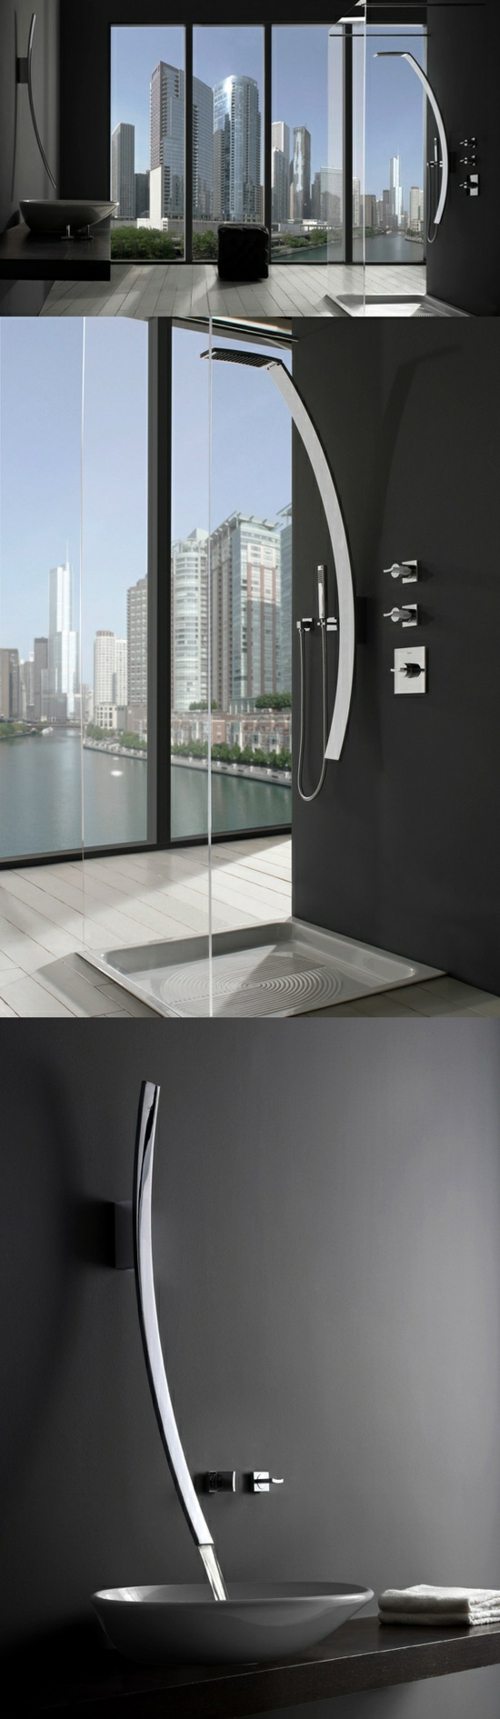 masculine bathroom accessories minimalist design